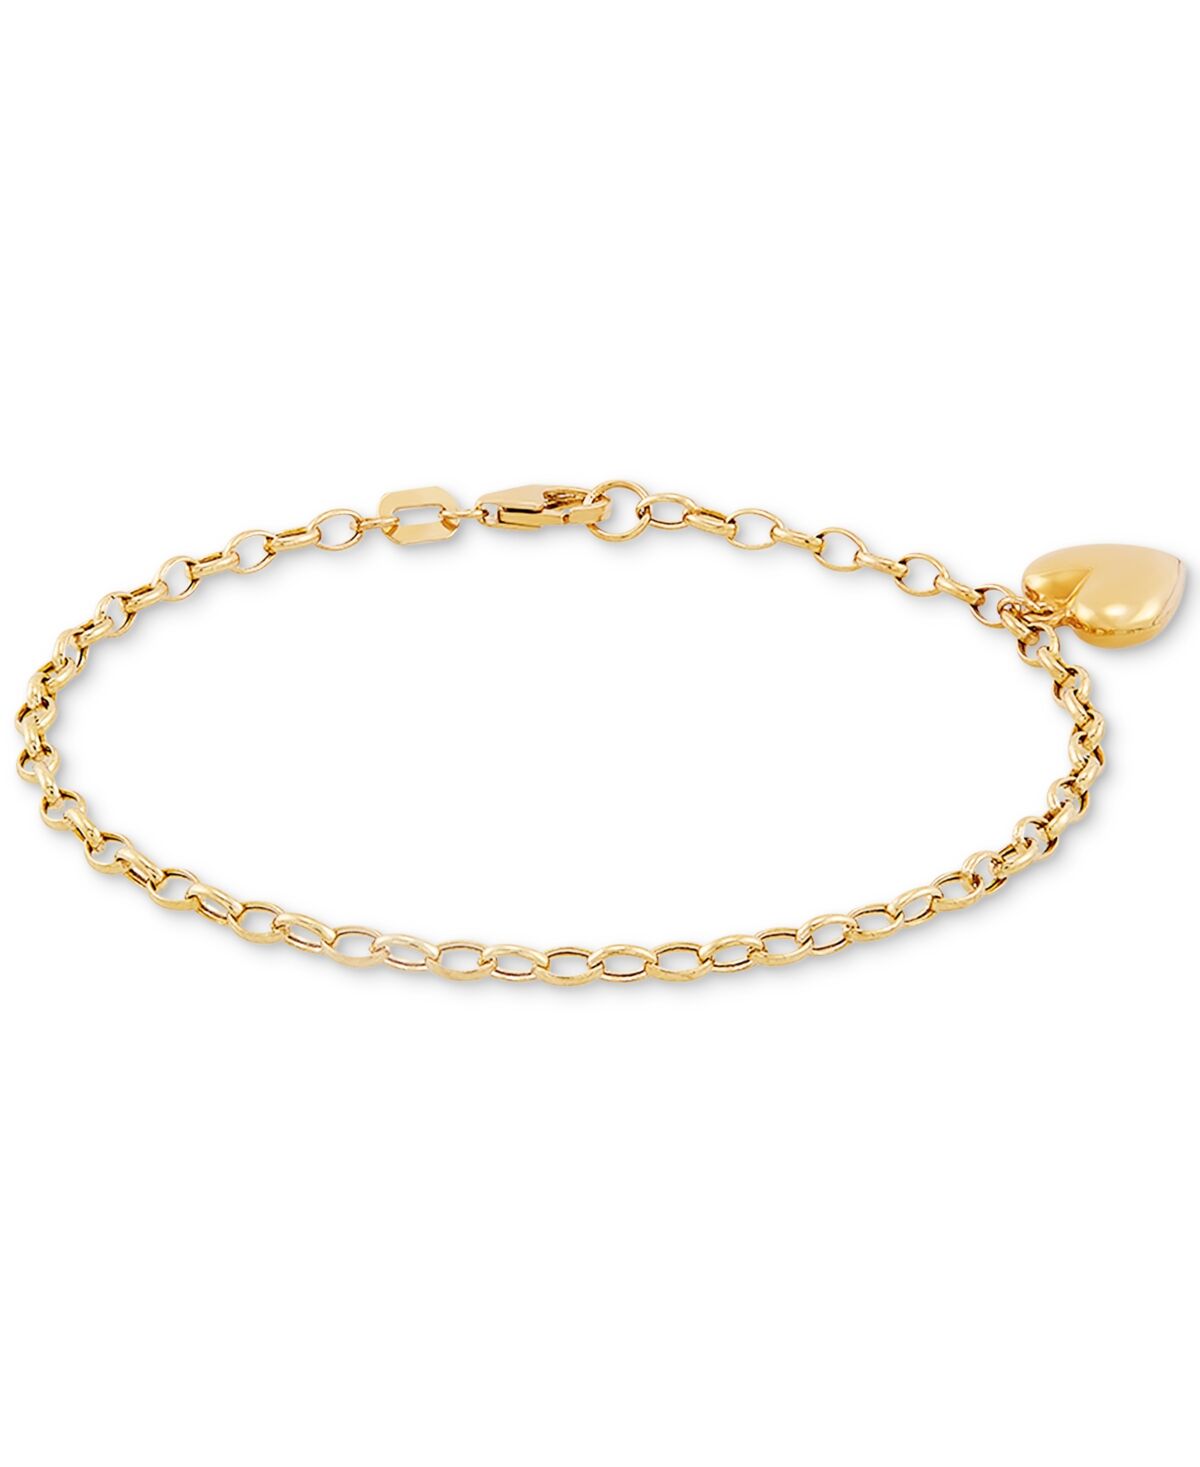 Macy's Heart Charm Link Chain Bracelet in 10k Gold - Yellow Gold